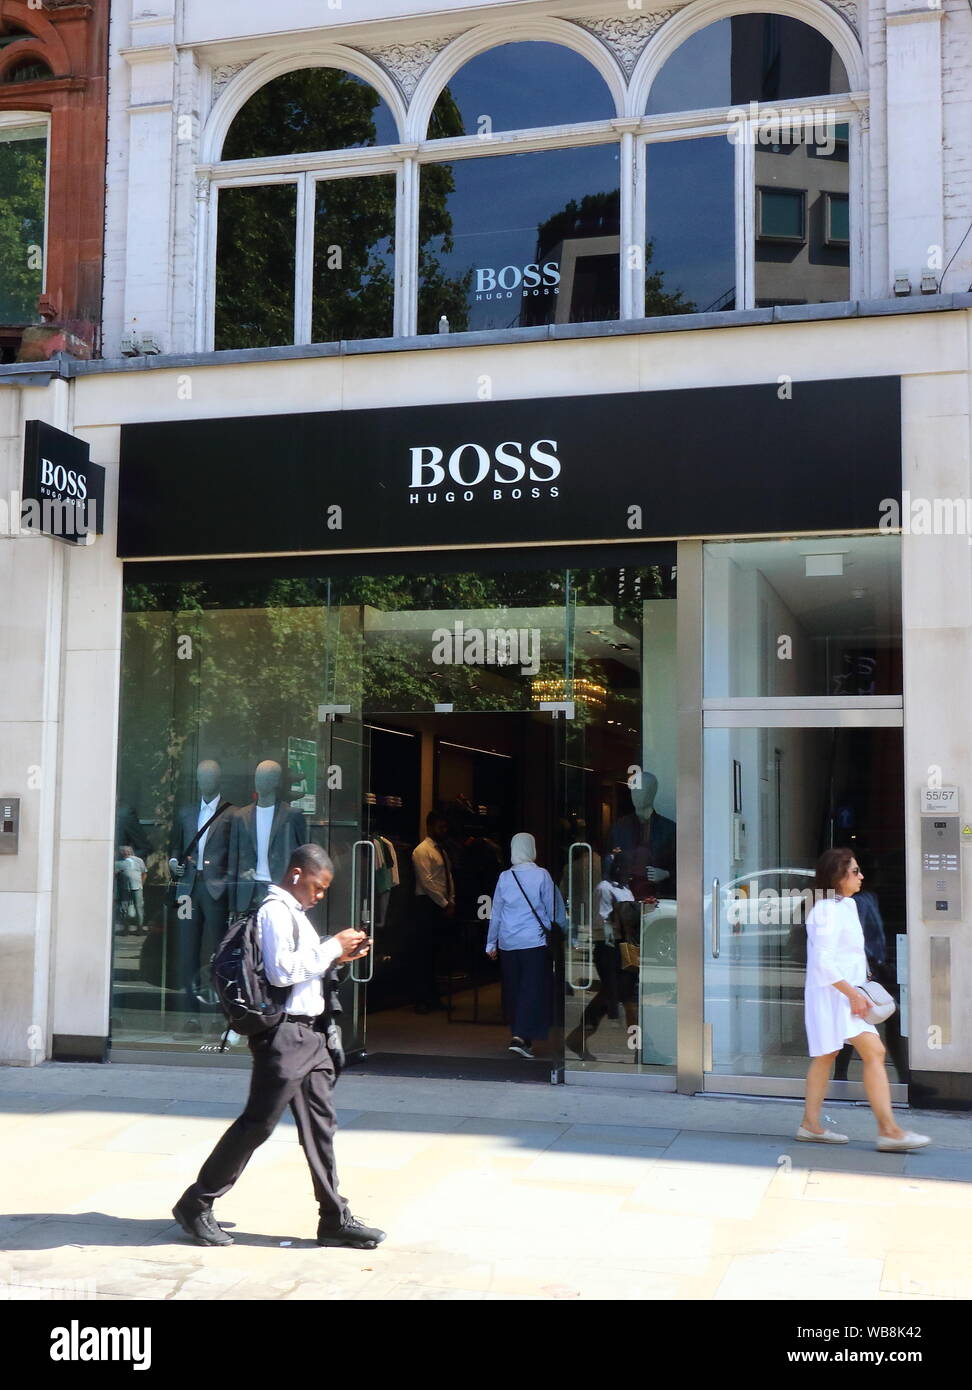 biggest hugo boss store in london